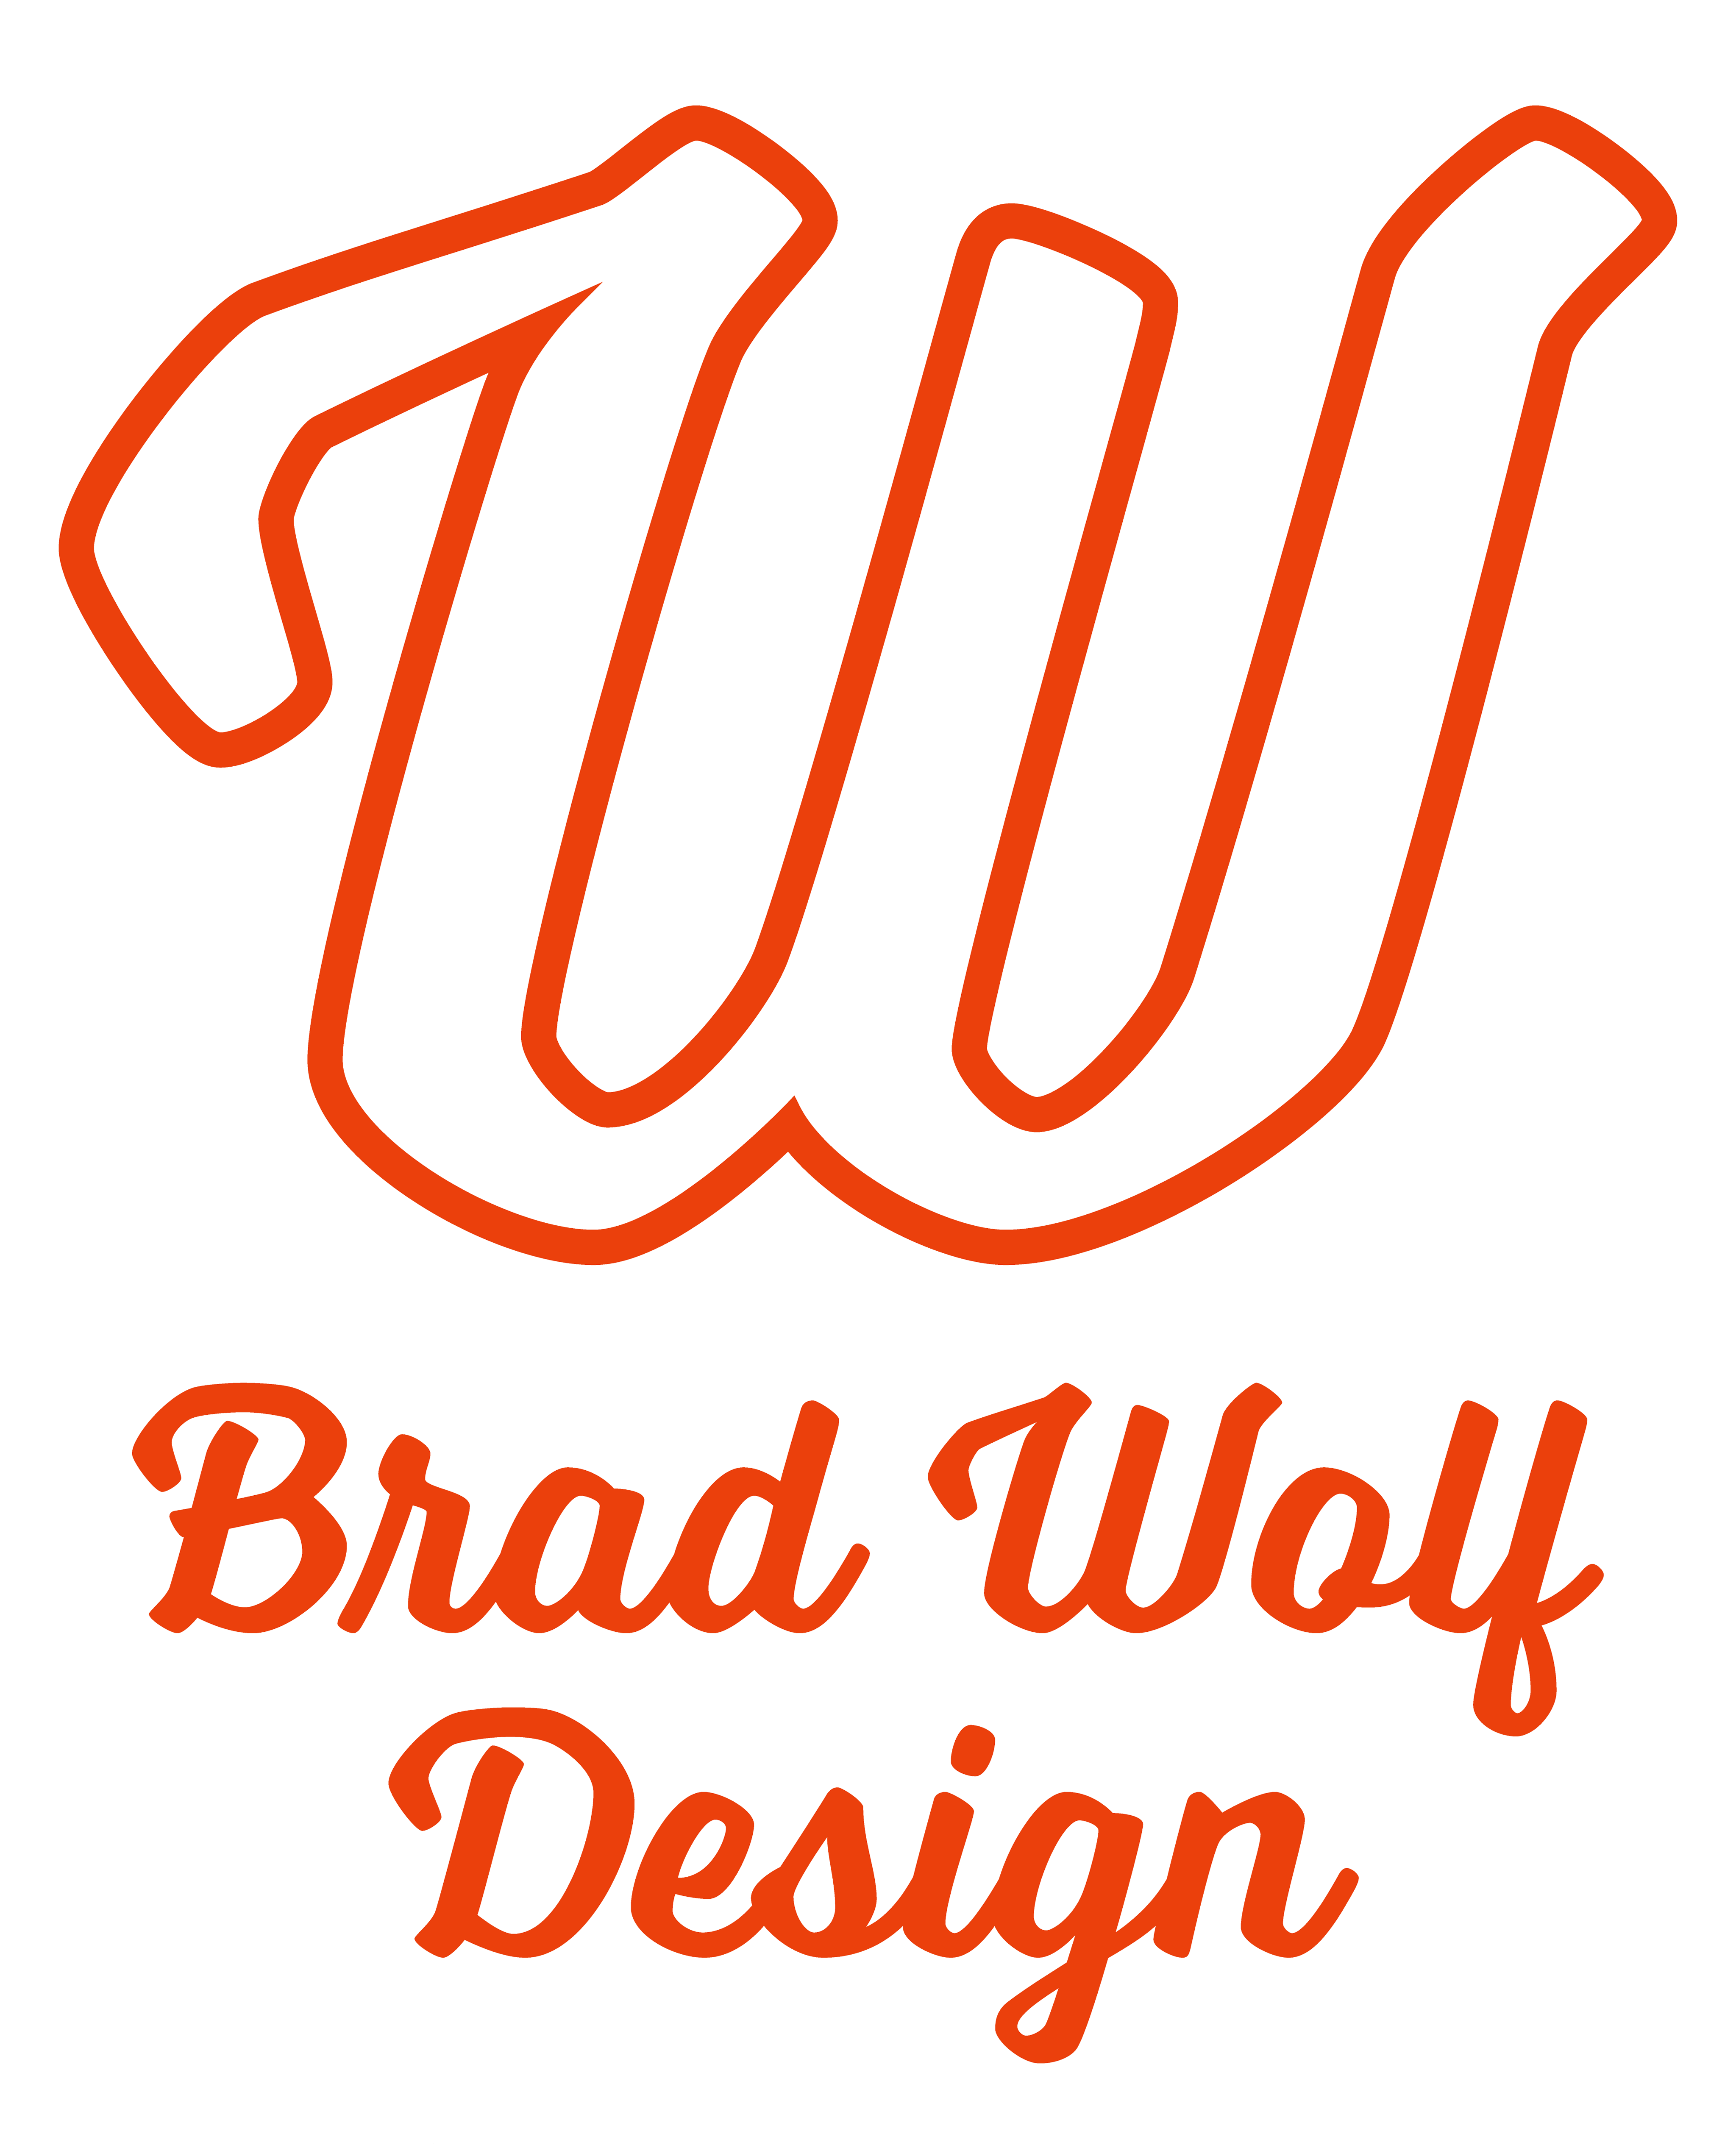 Brad Wolf Design